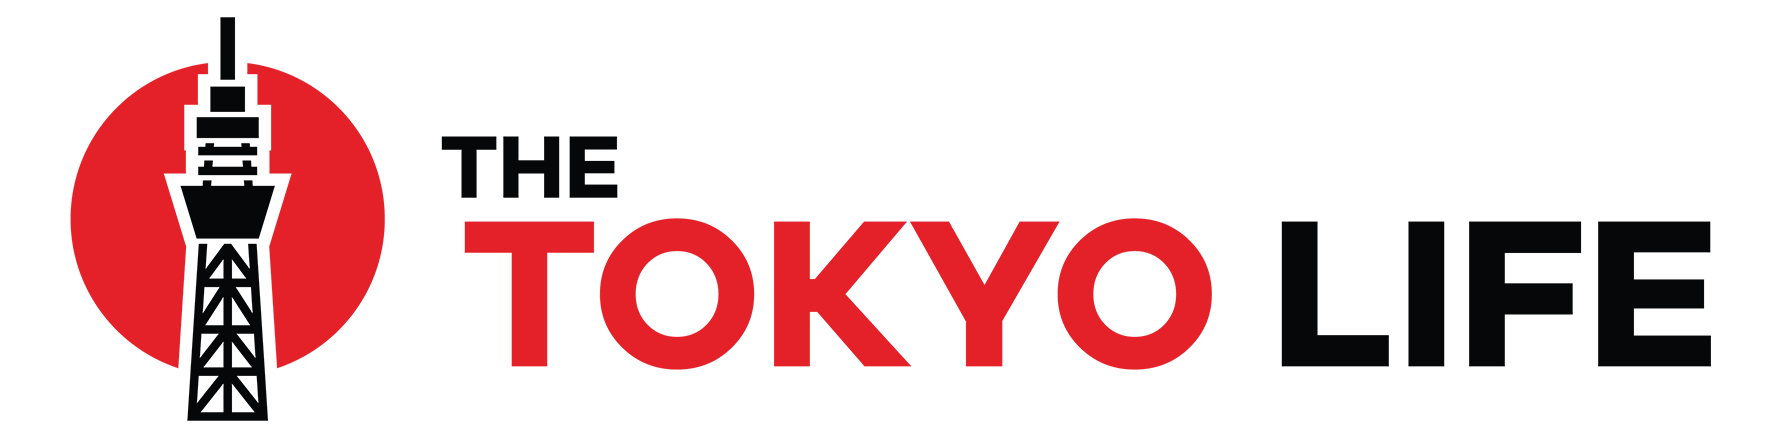 the-tokyo-life-logo-website-header